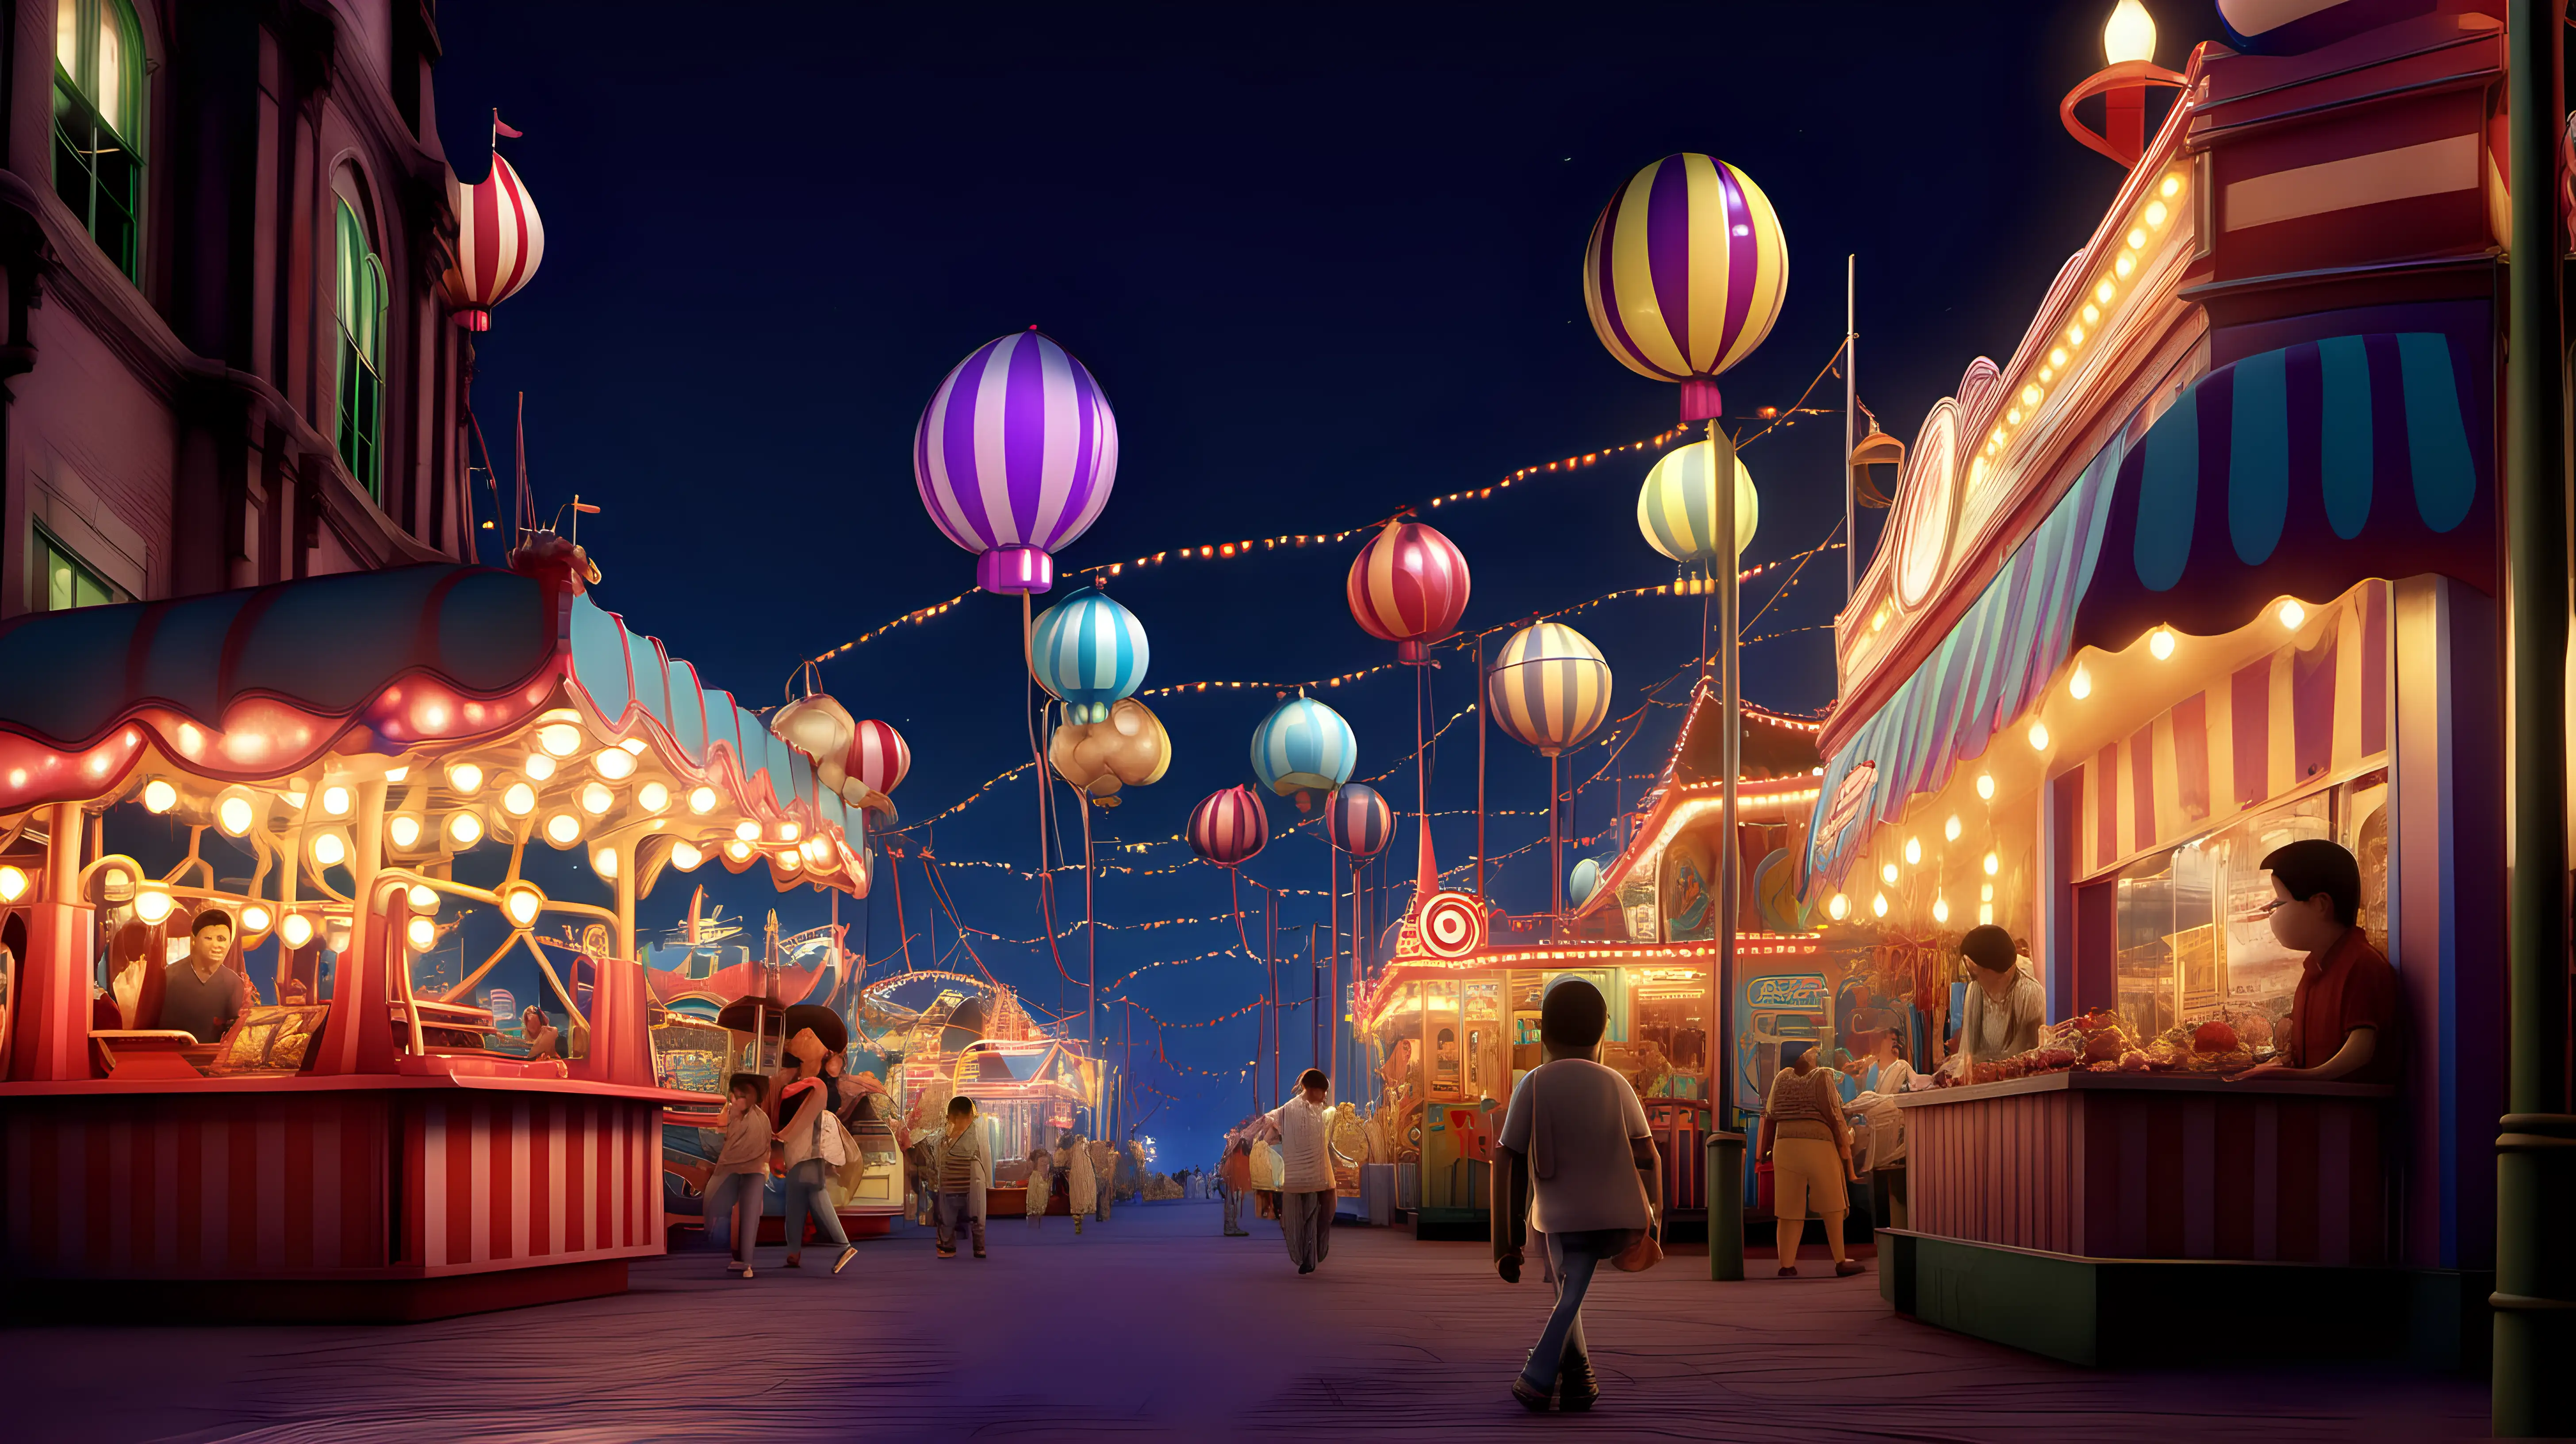 long side view of amusement park at night venders at night pixar style sidewalk street 

 
